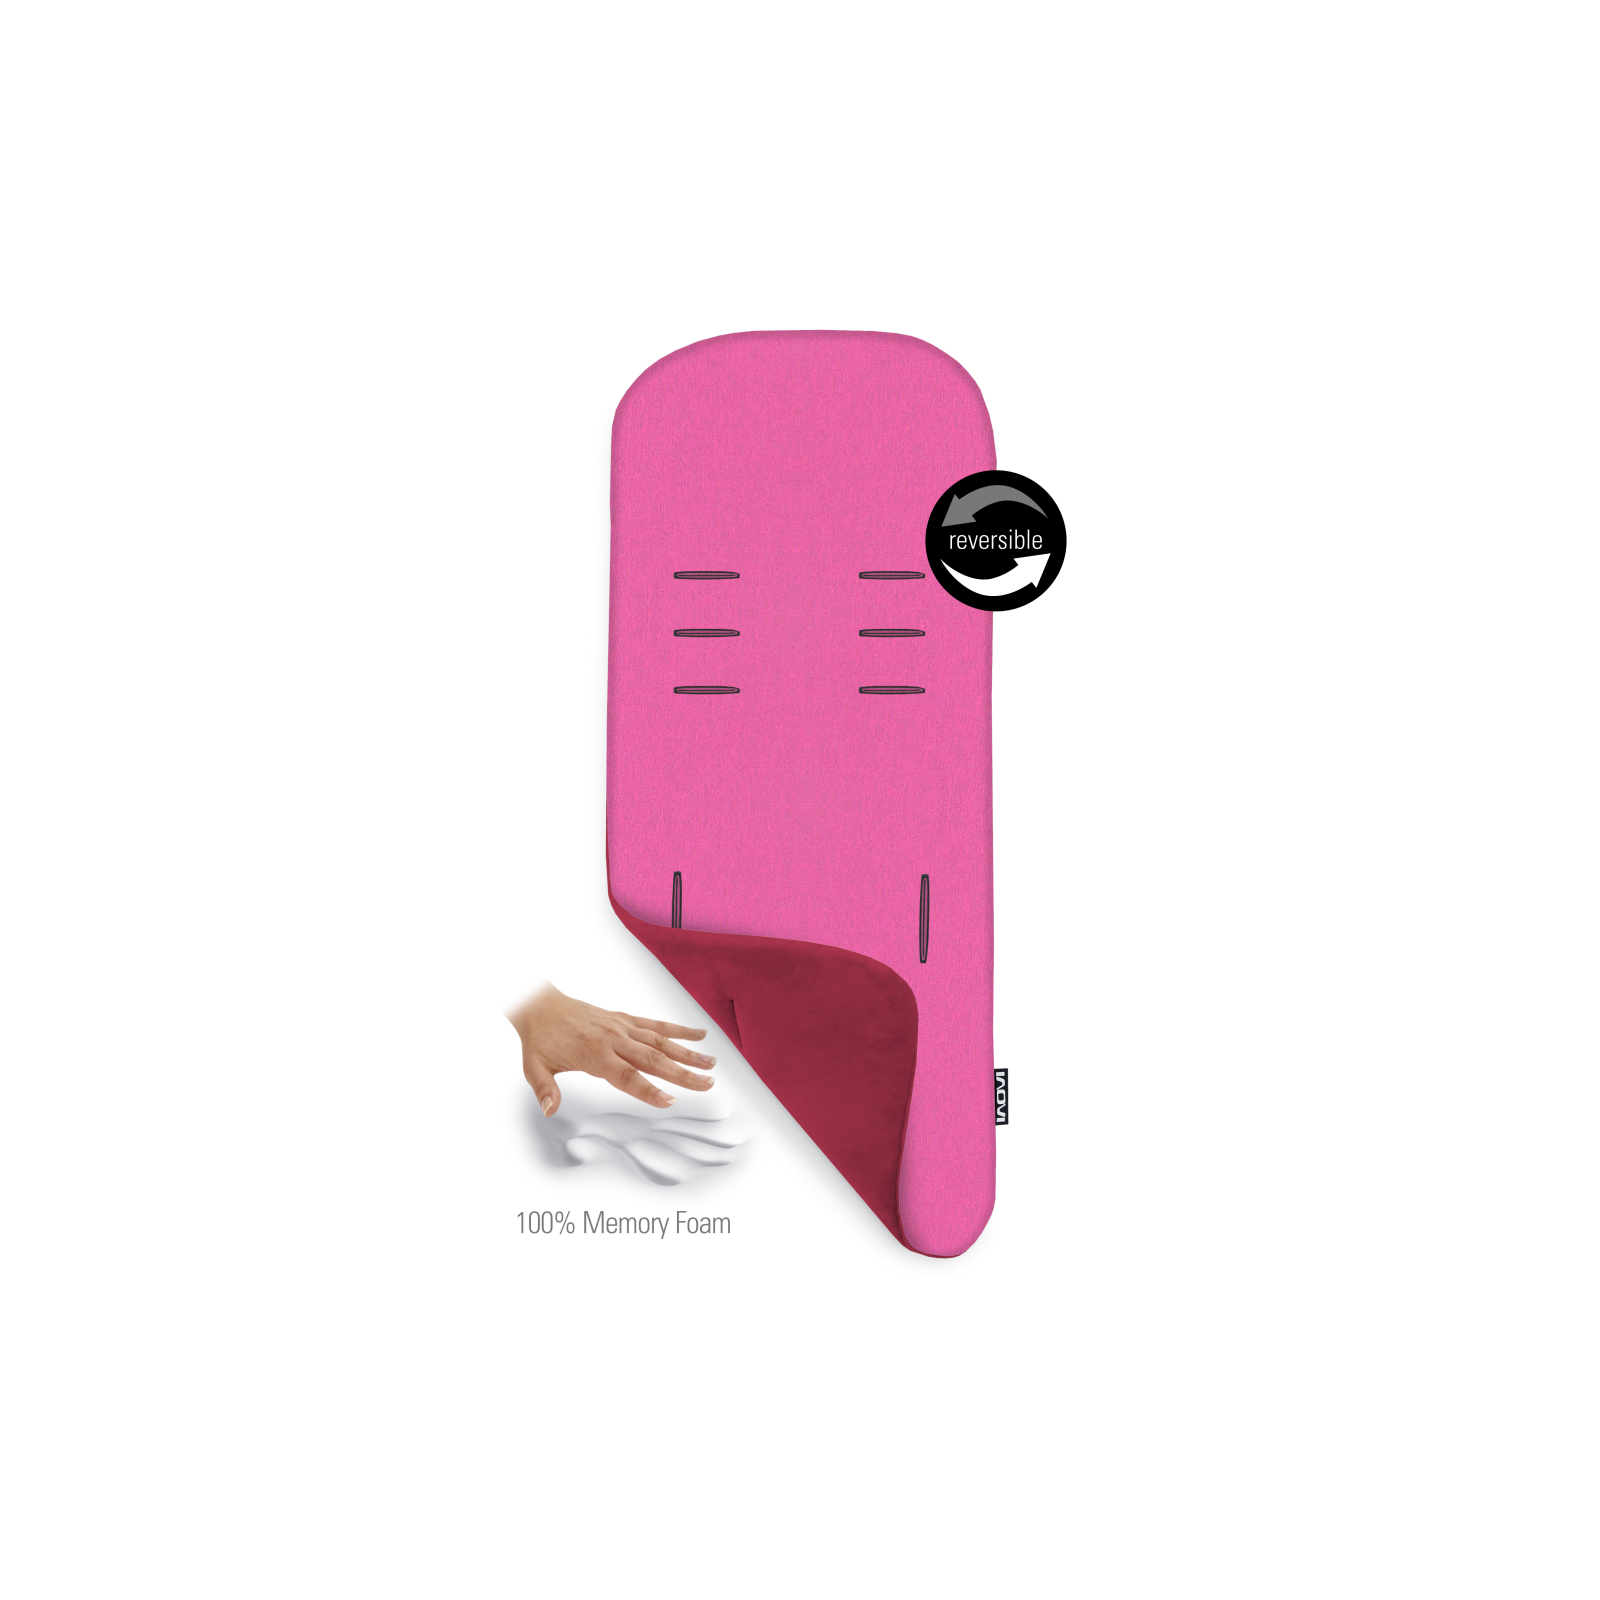 Матрасик в коляску Maxi-Cosi Inovi Memory Foam Pink-Pink M (41201-215) изображение 3